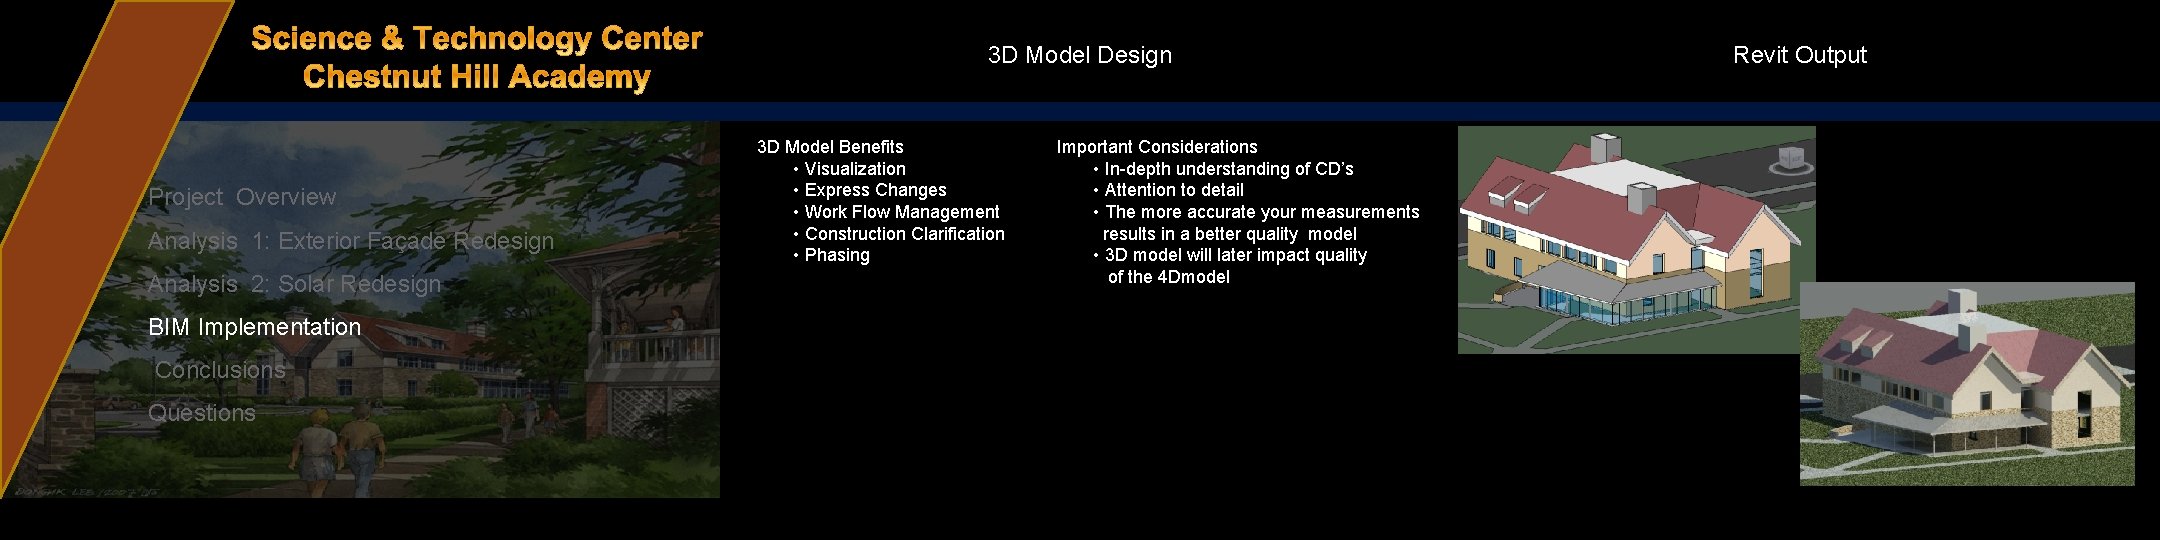 3 D Model Design Project Overview Analysis 1: Exterior Façade Redesign Analysis 2: Solar